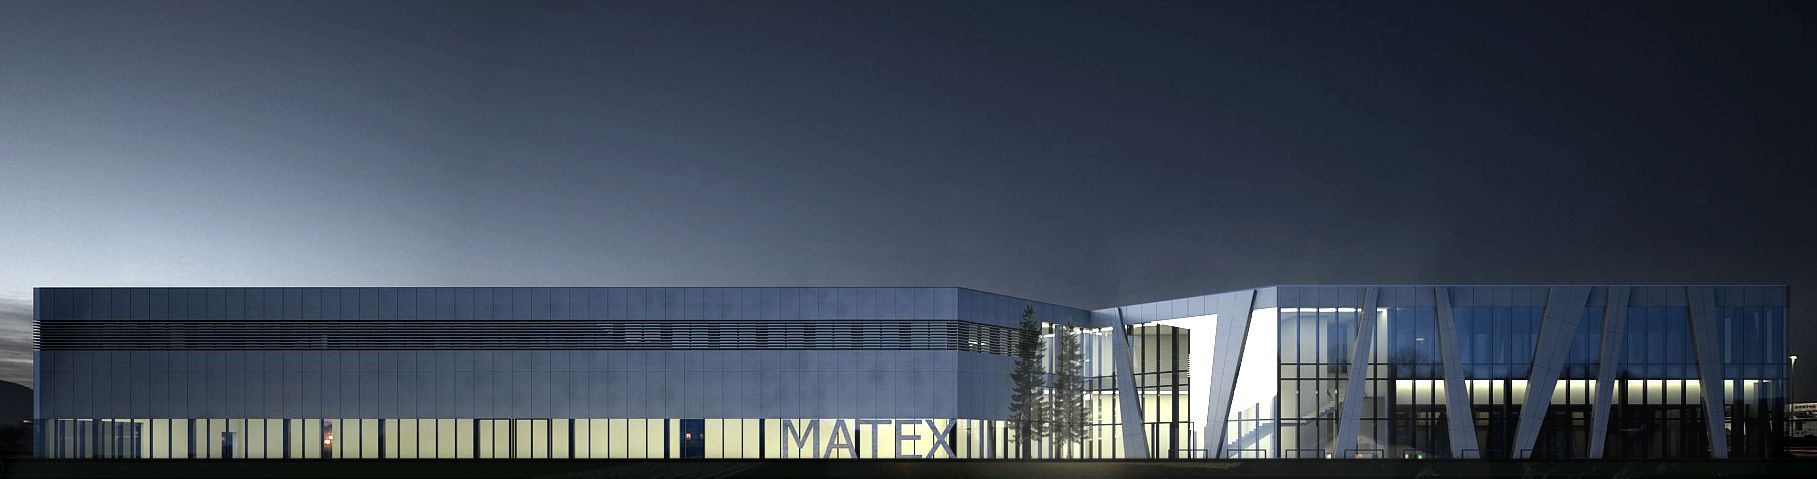 Matex F3 Architekci panorama